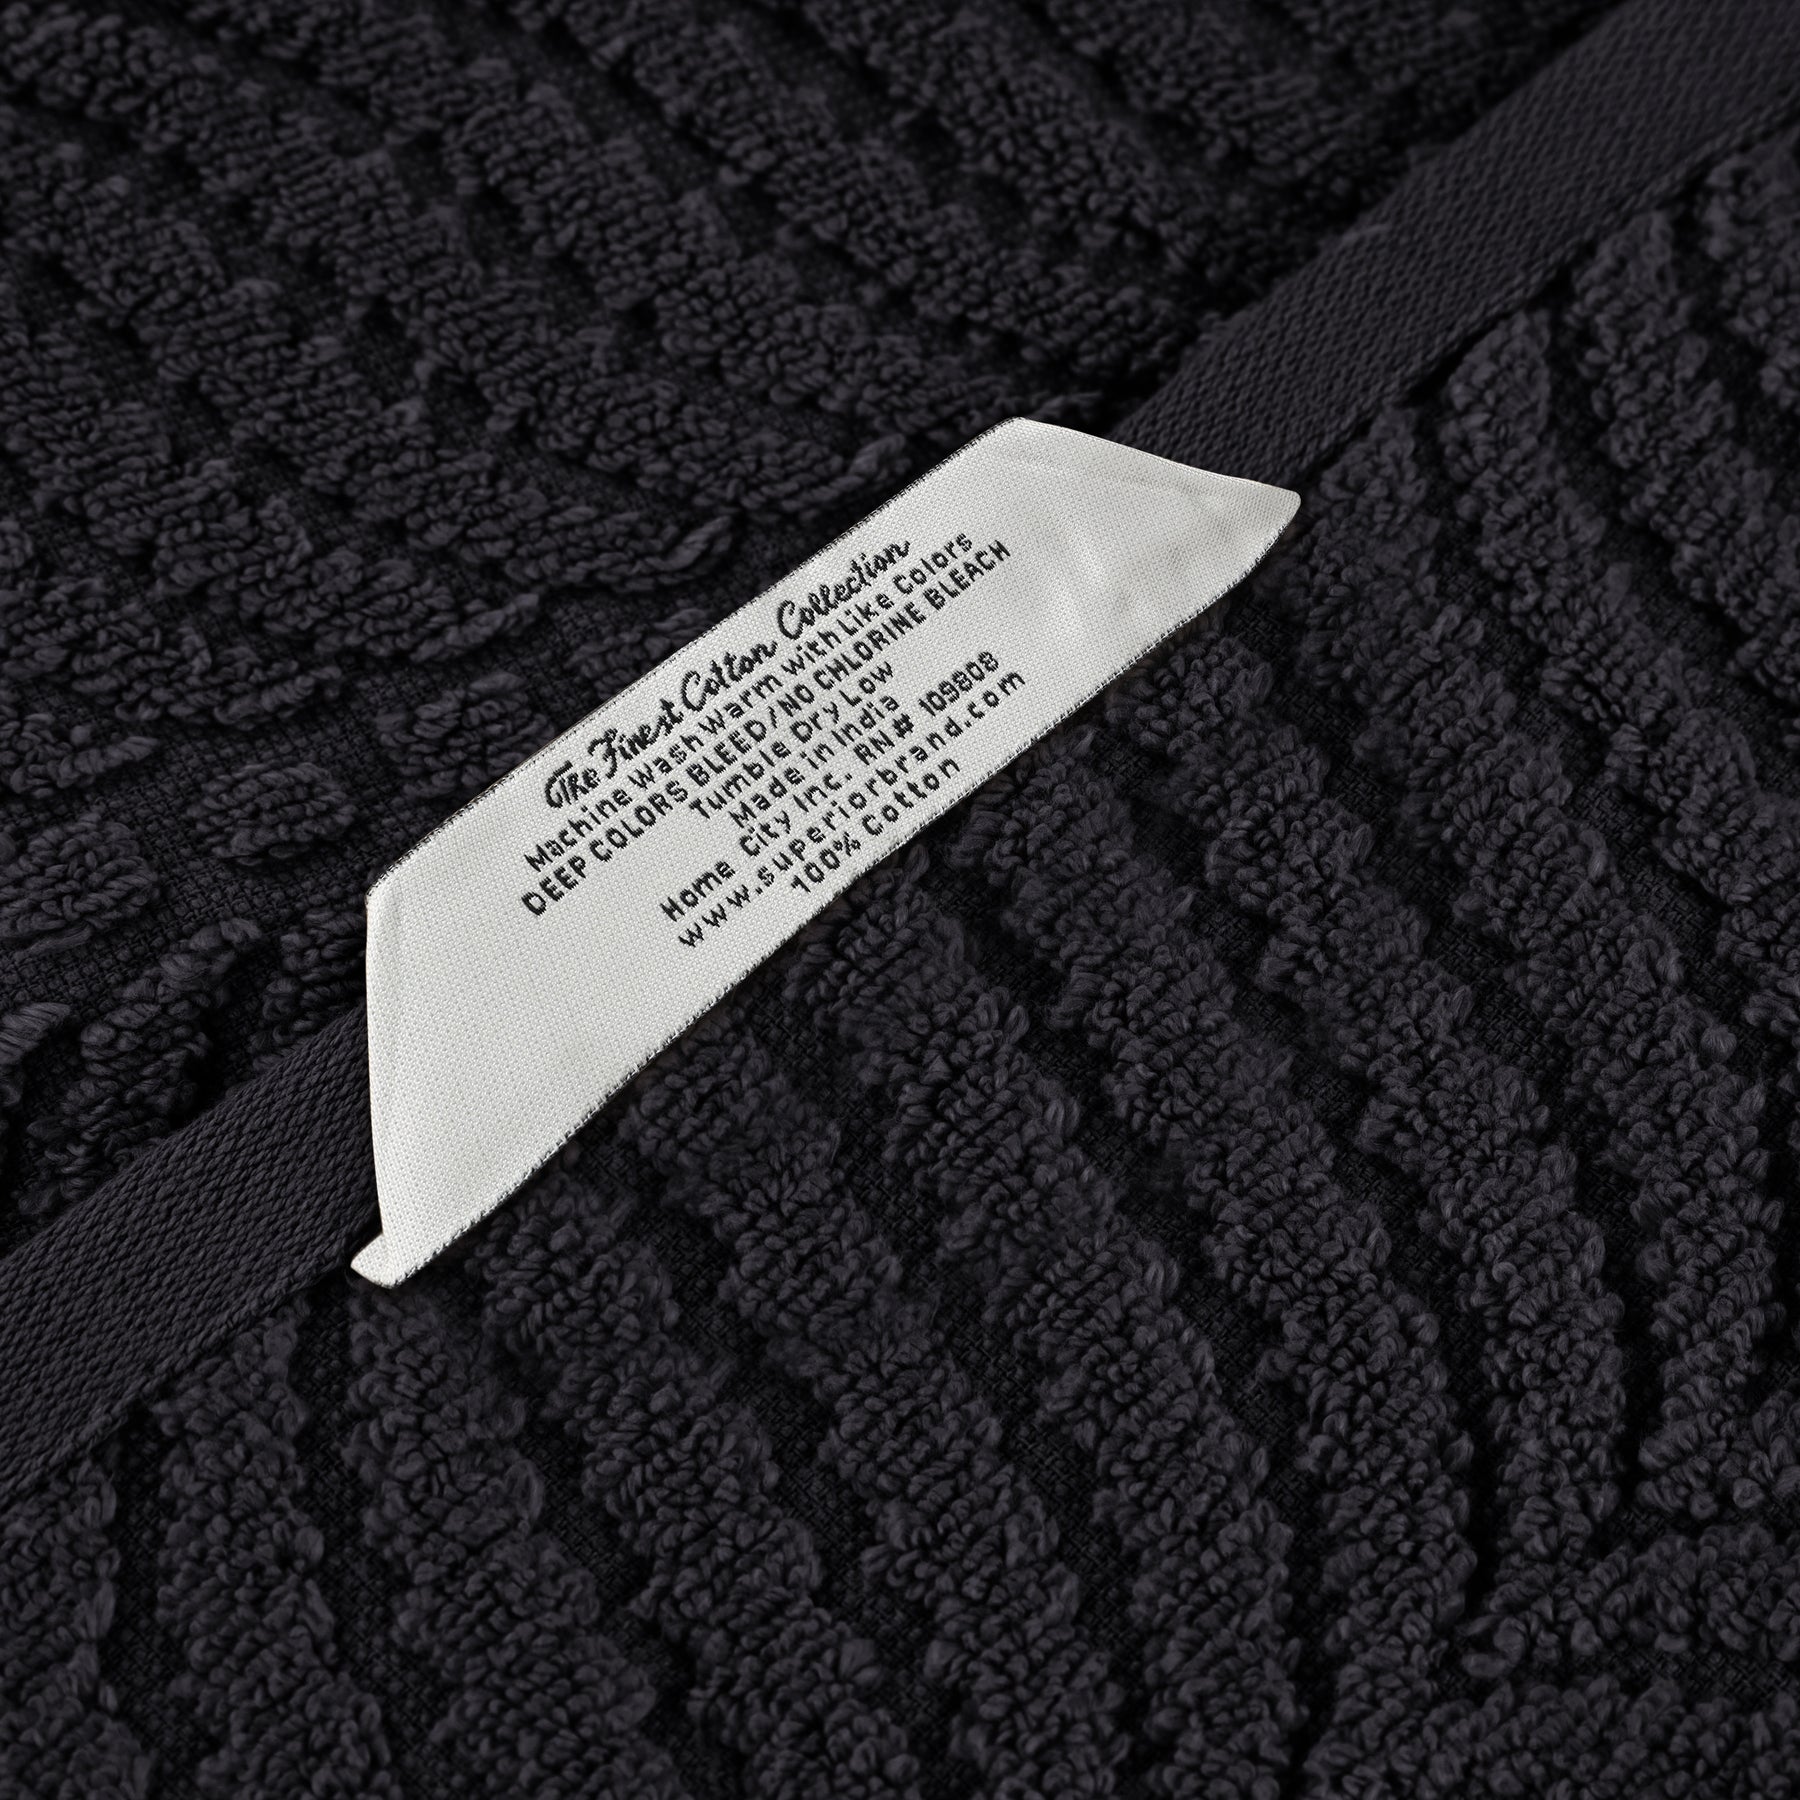 Chevron Zero Twist Cotton Solid and Jacquard 6 Piece Towel Set - Black